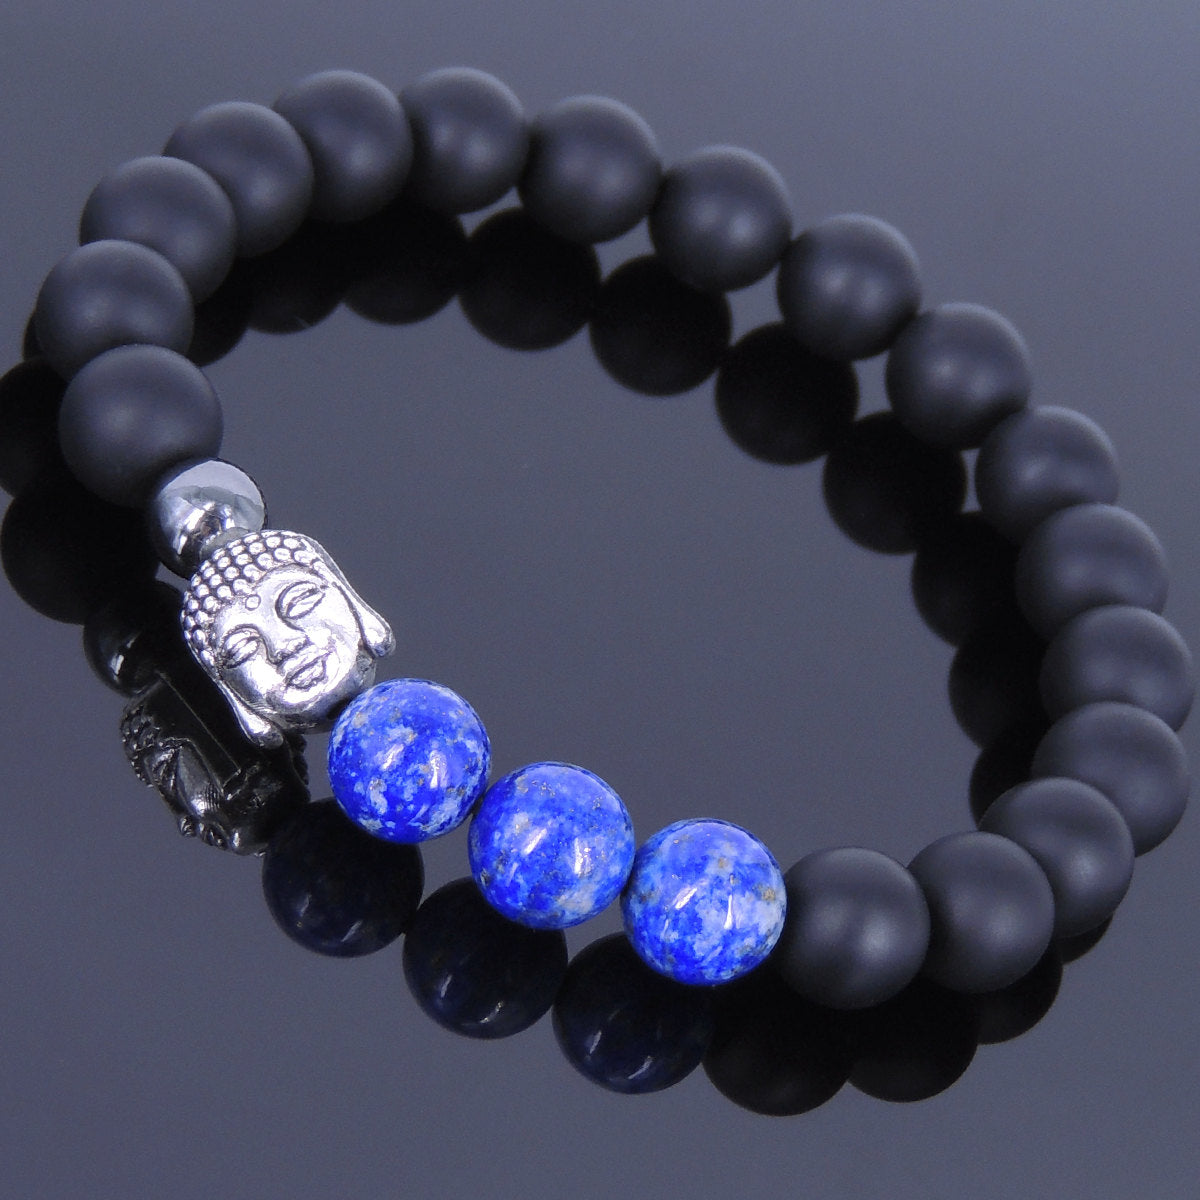 Lapis Lazuli, Matte Black Onyx & Hematite Healing Gemstone Bracelet with S925 Sterling Silver Sakyamuni Buddha - Handmade by Gem & Silver TSB032